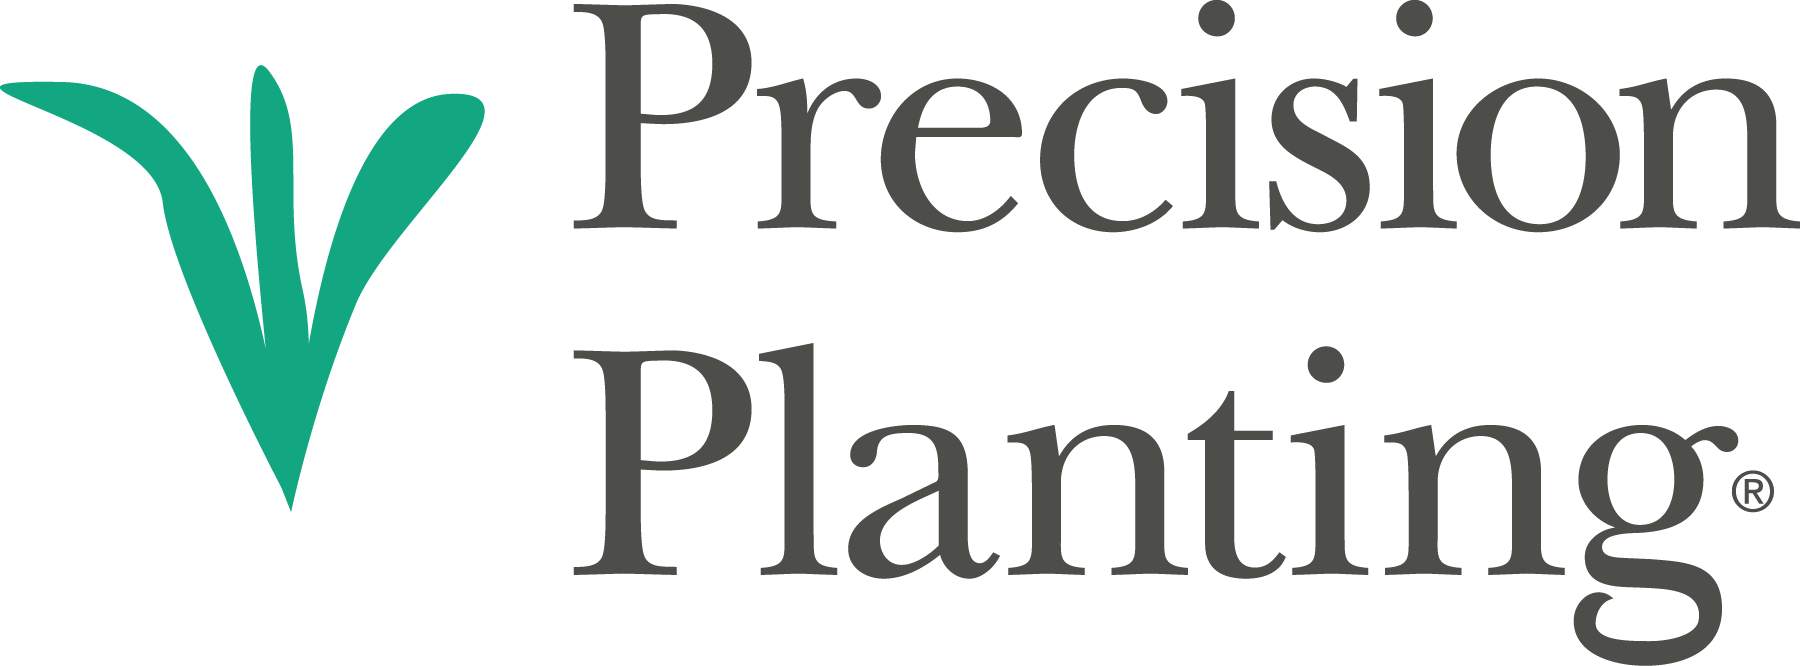 PrecisionPlanting Vertical 4C GRAY